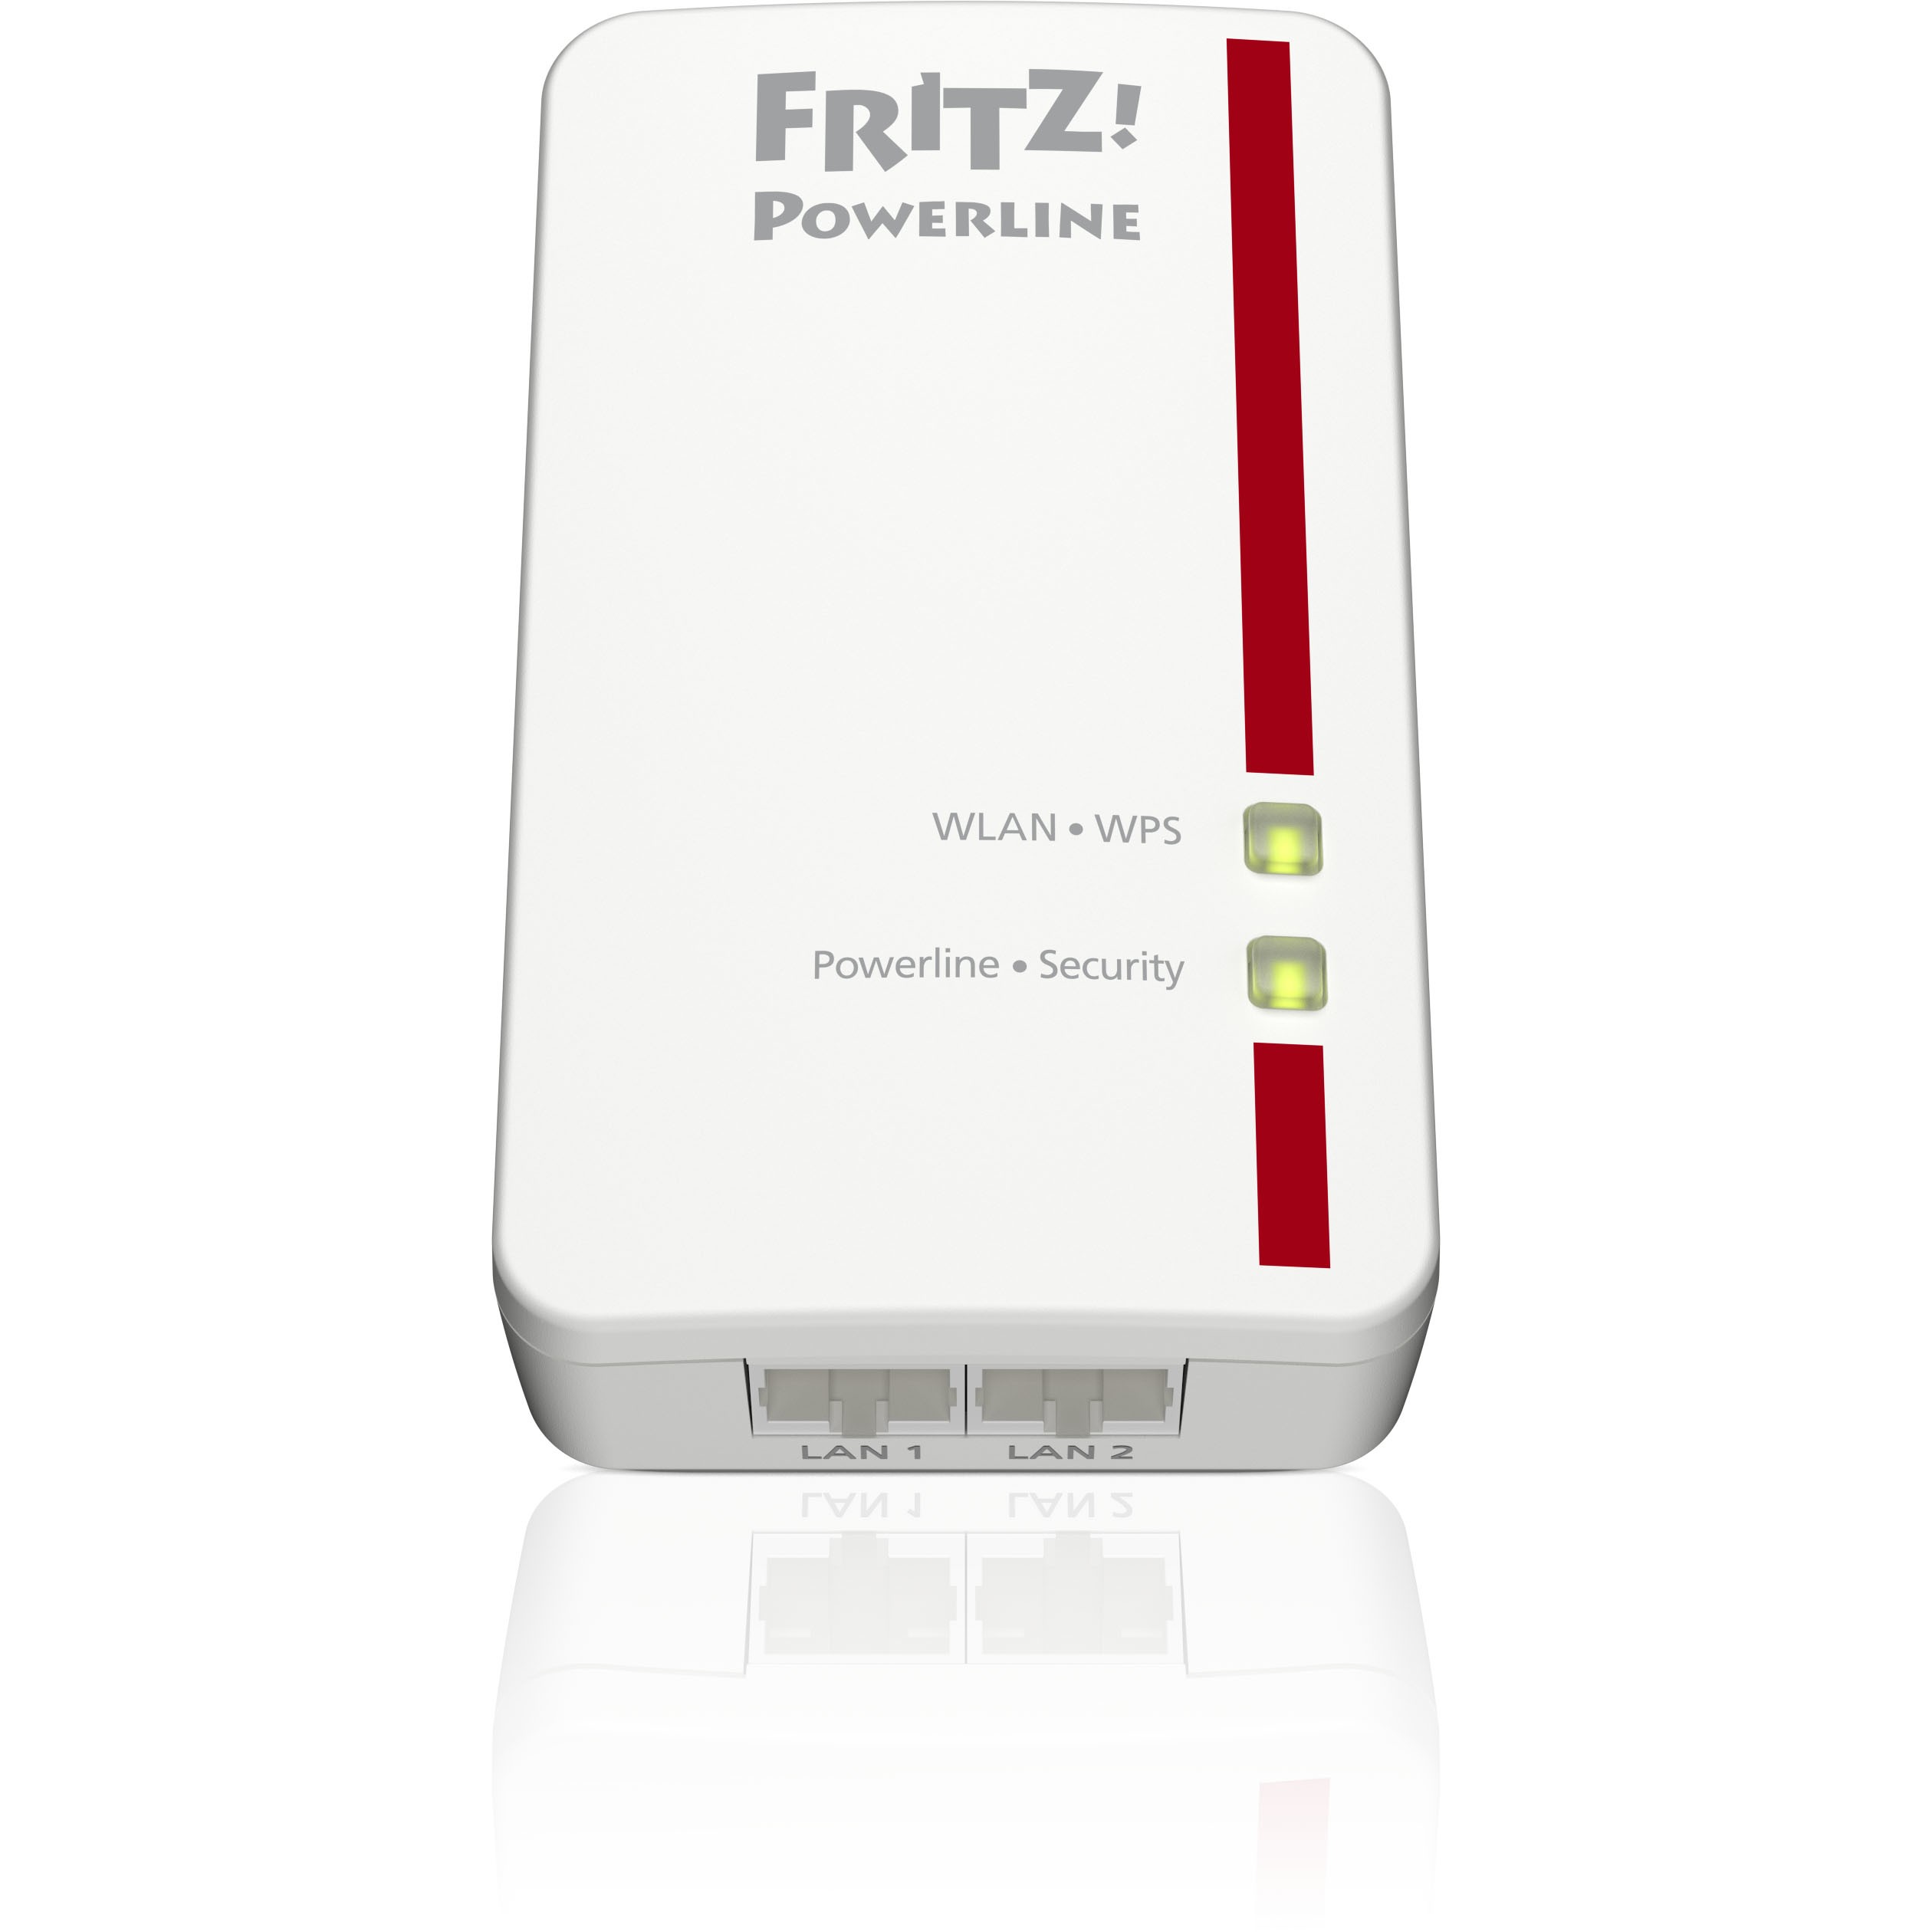 Powerline AVM FRITZ!Powerline 540E WLAN-Set (300MBit) retail